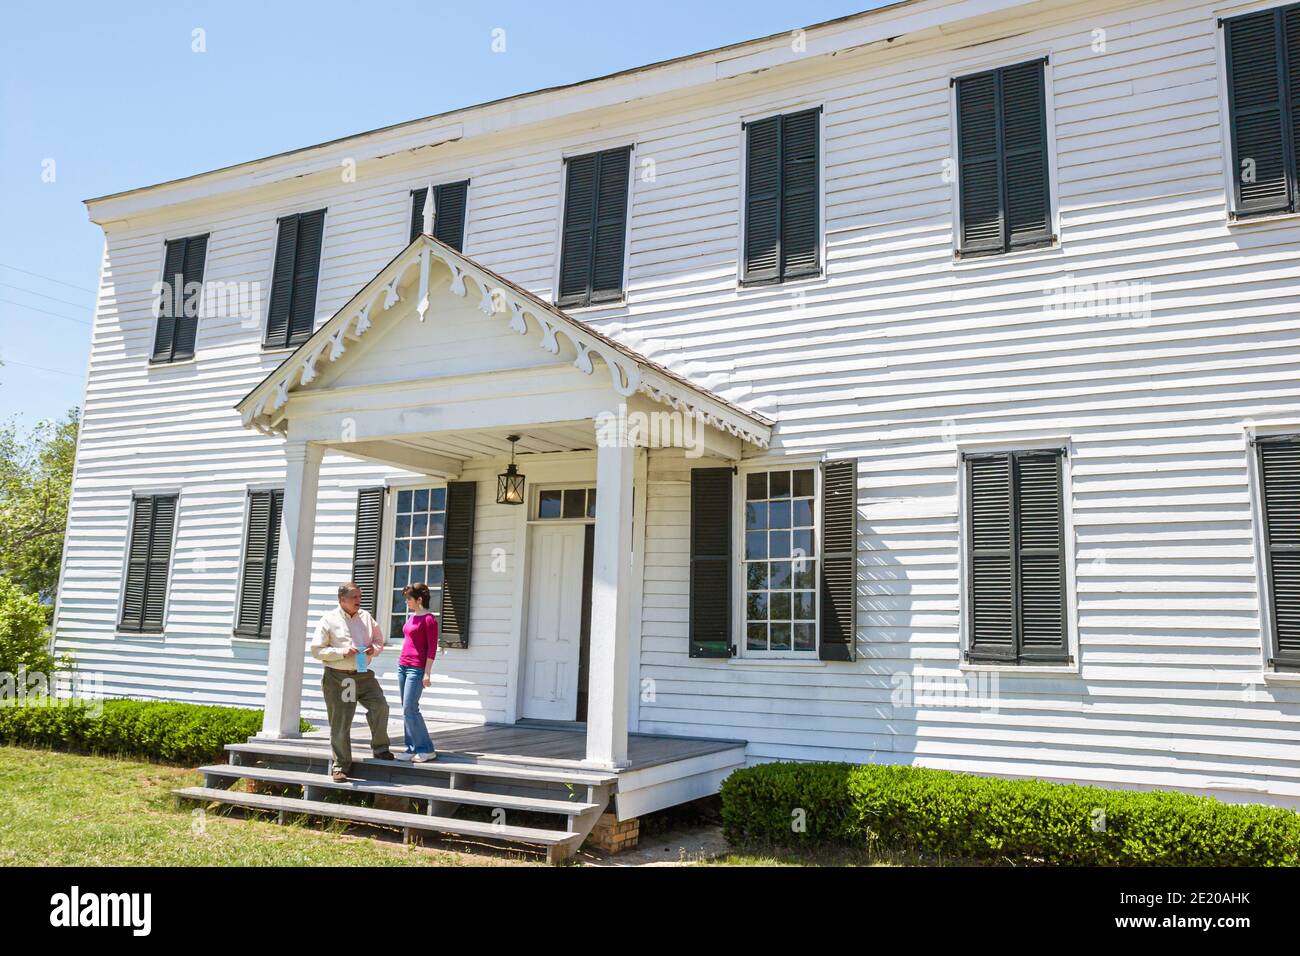 Alabama Perdue Hill Masonic Lodge No. 3 built 1824 entrance,front exterior outside, Stock Photo